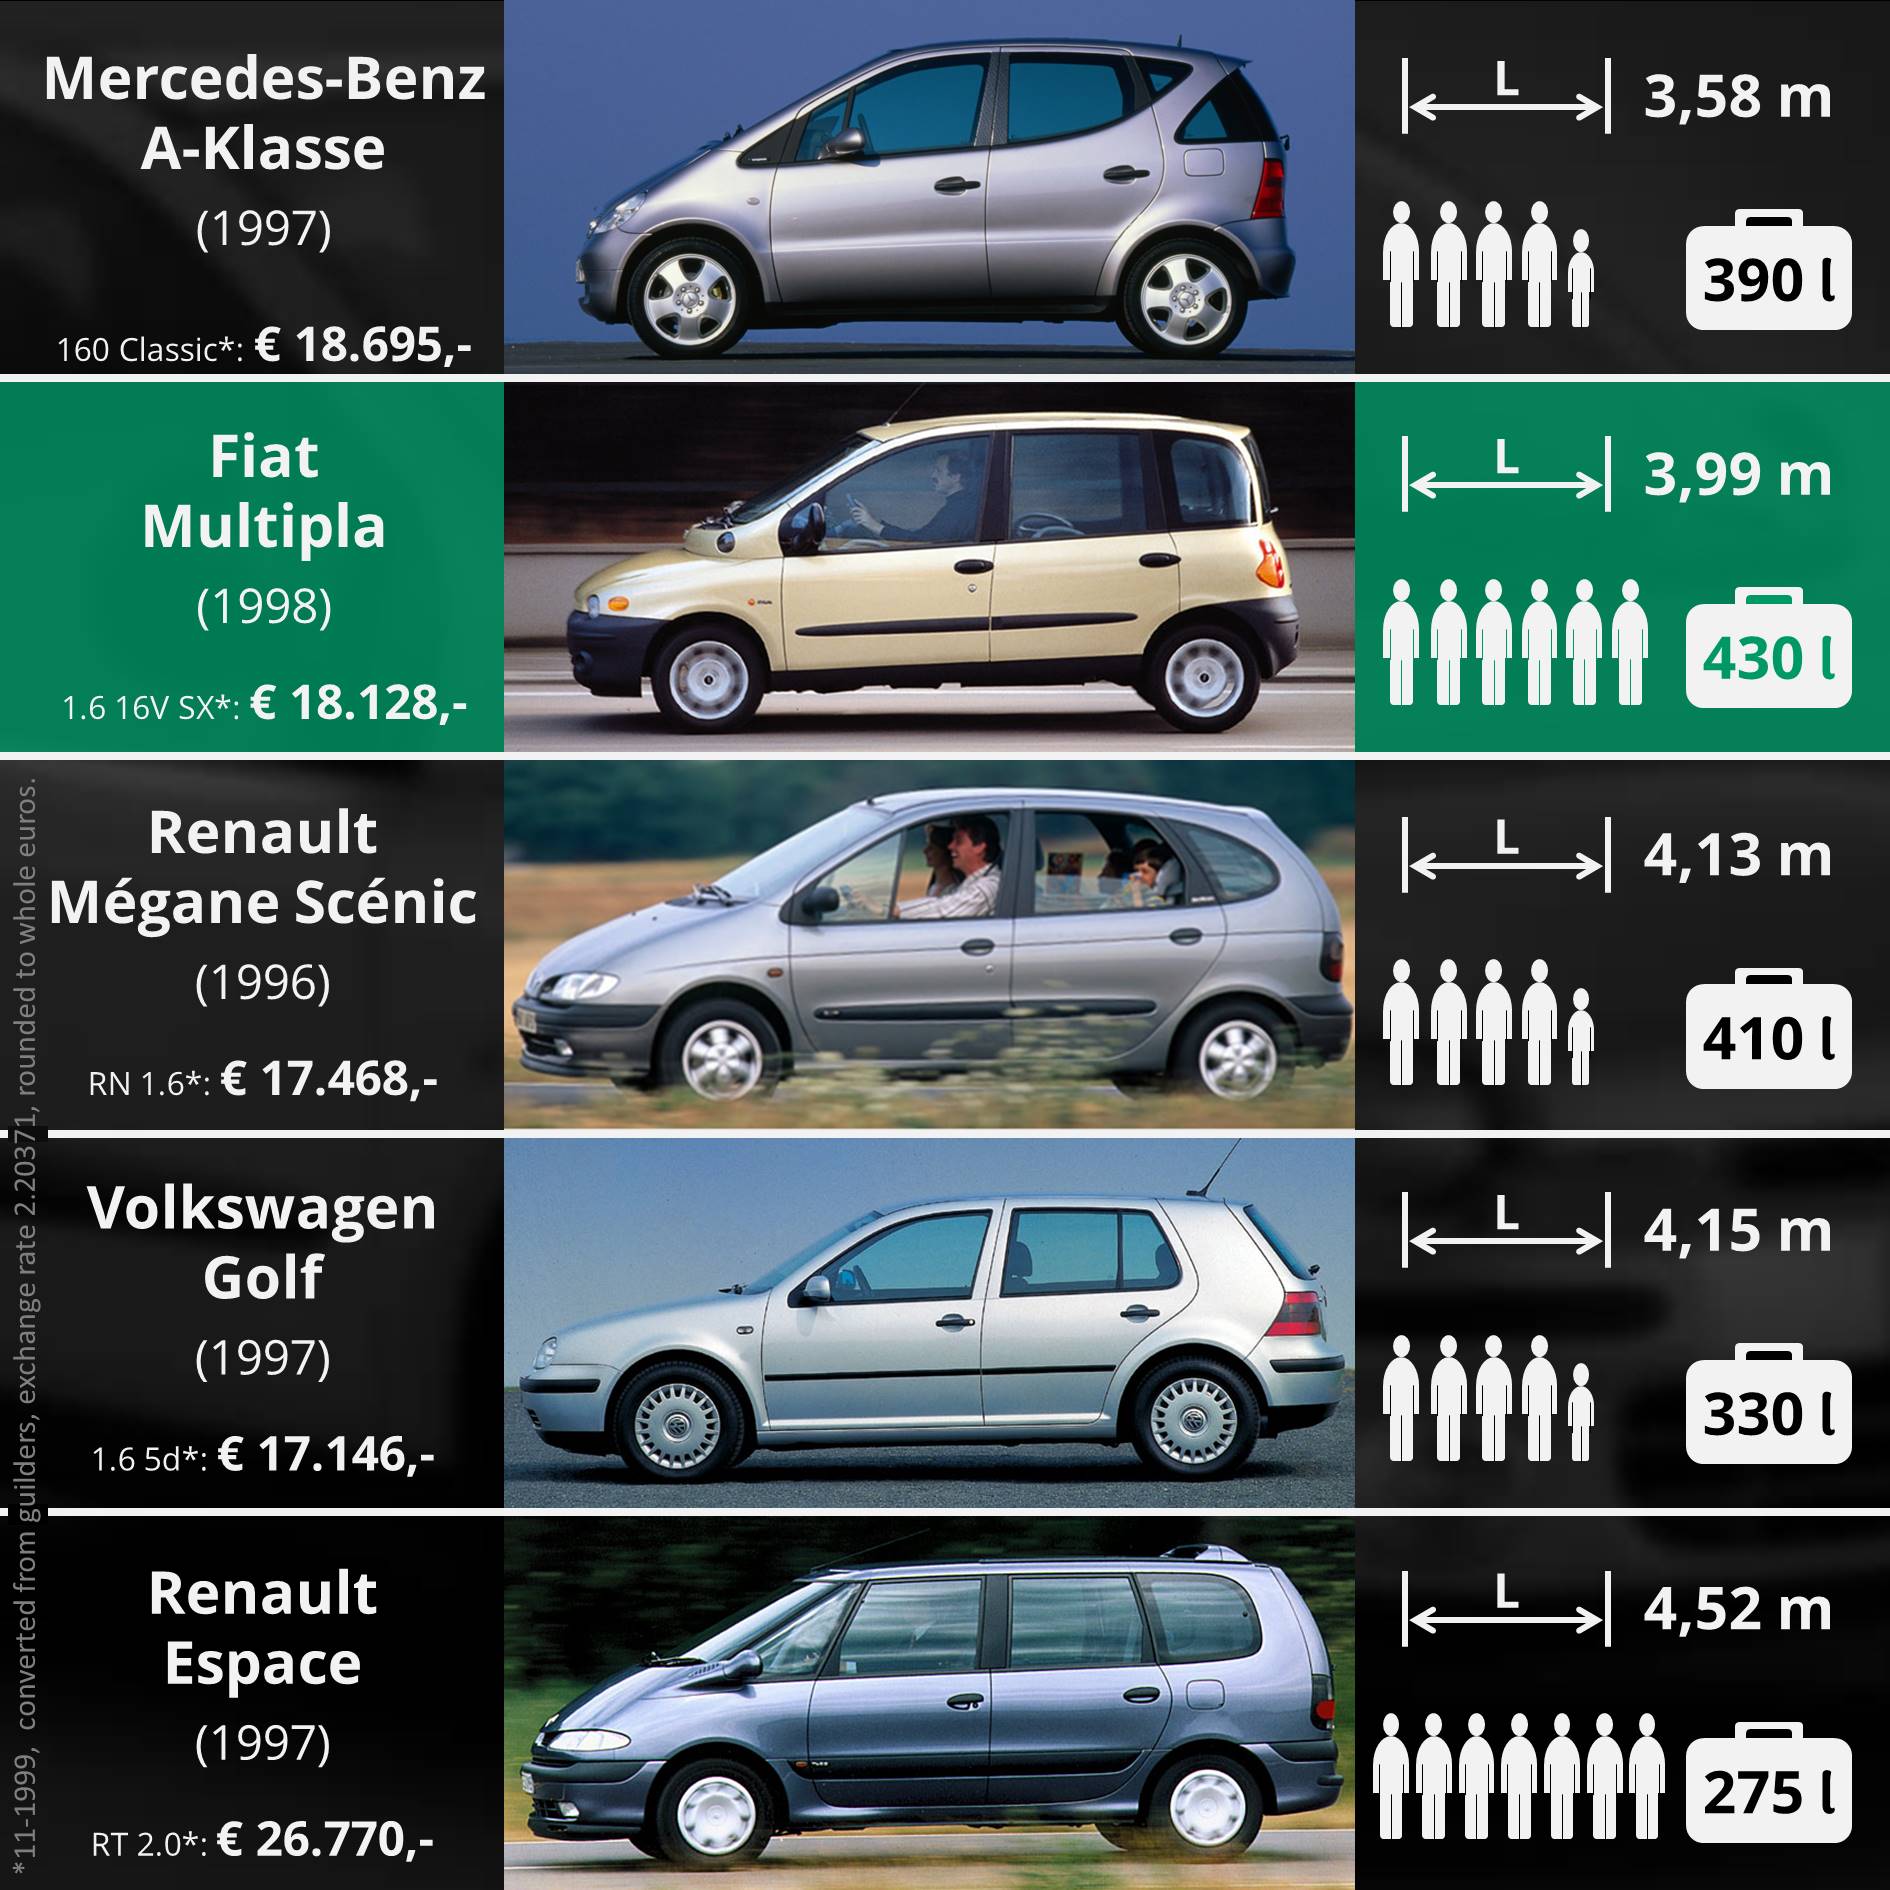 Comparison of five cars